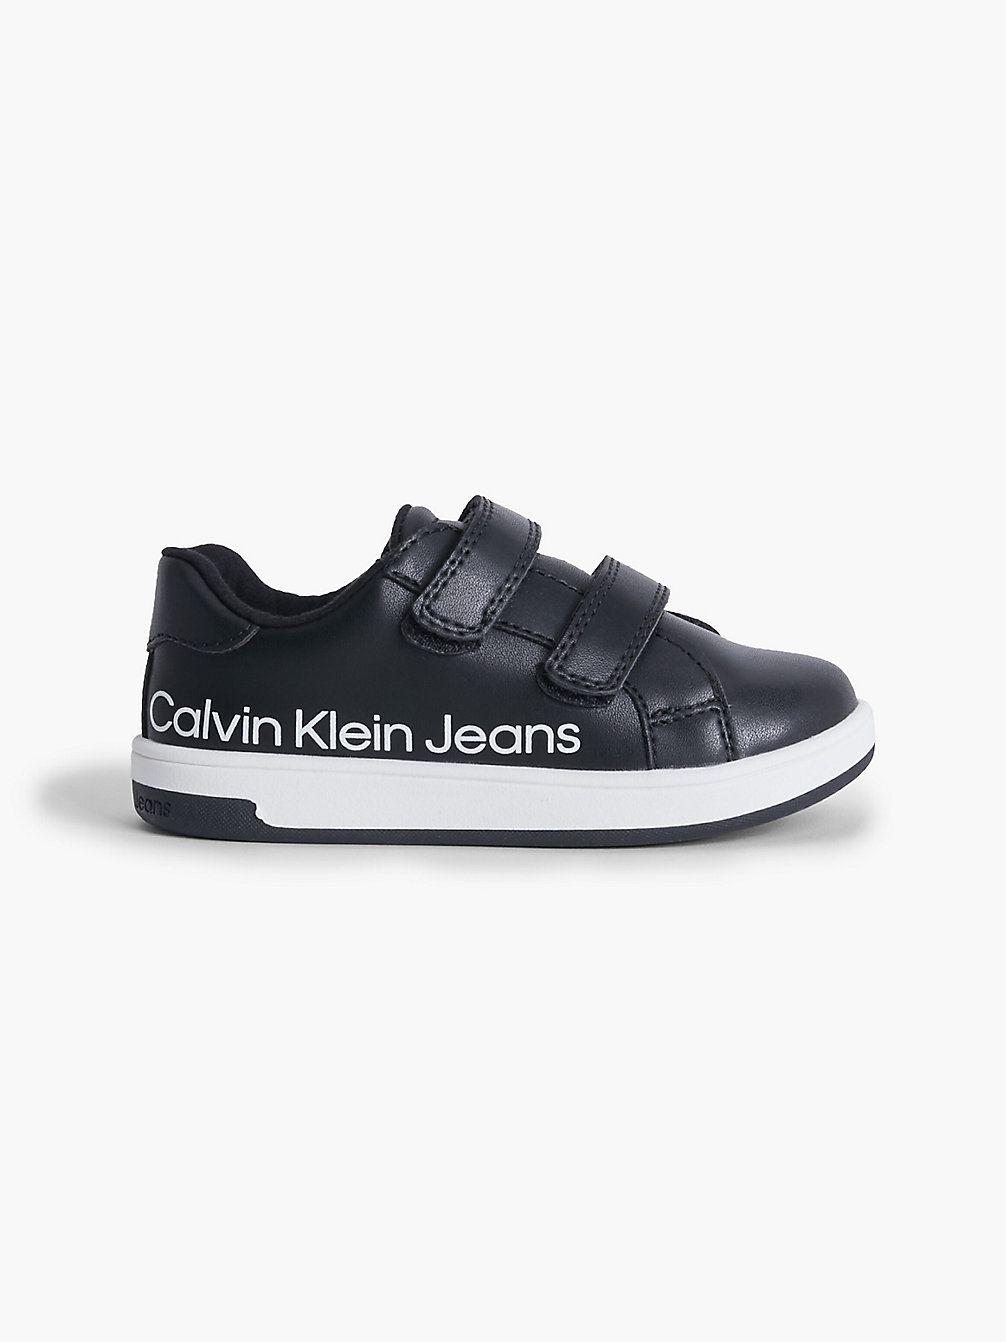 Sneakers Riciclate Per Bambini-Primi Passi > BLACK > undefined kids unisex > Calvin Klein